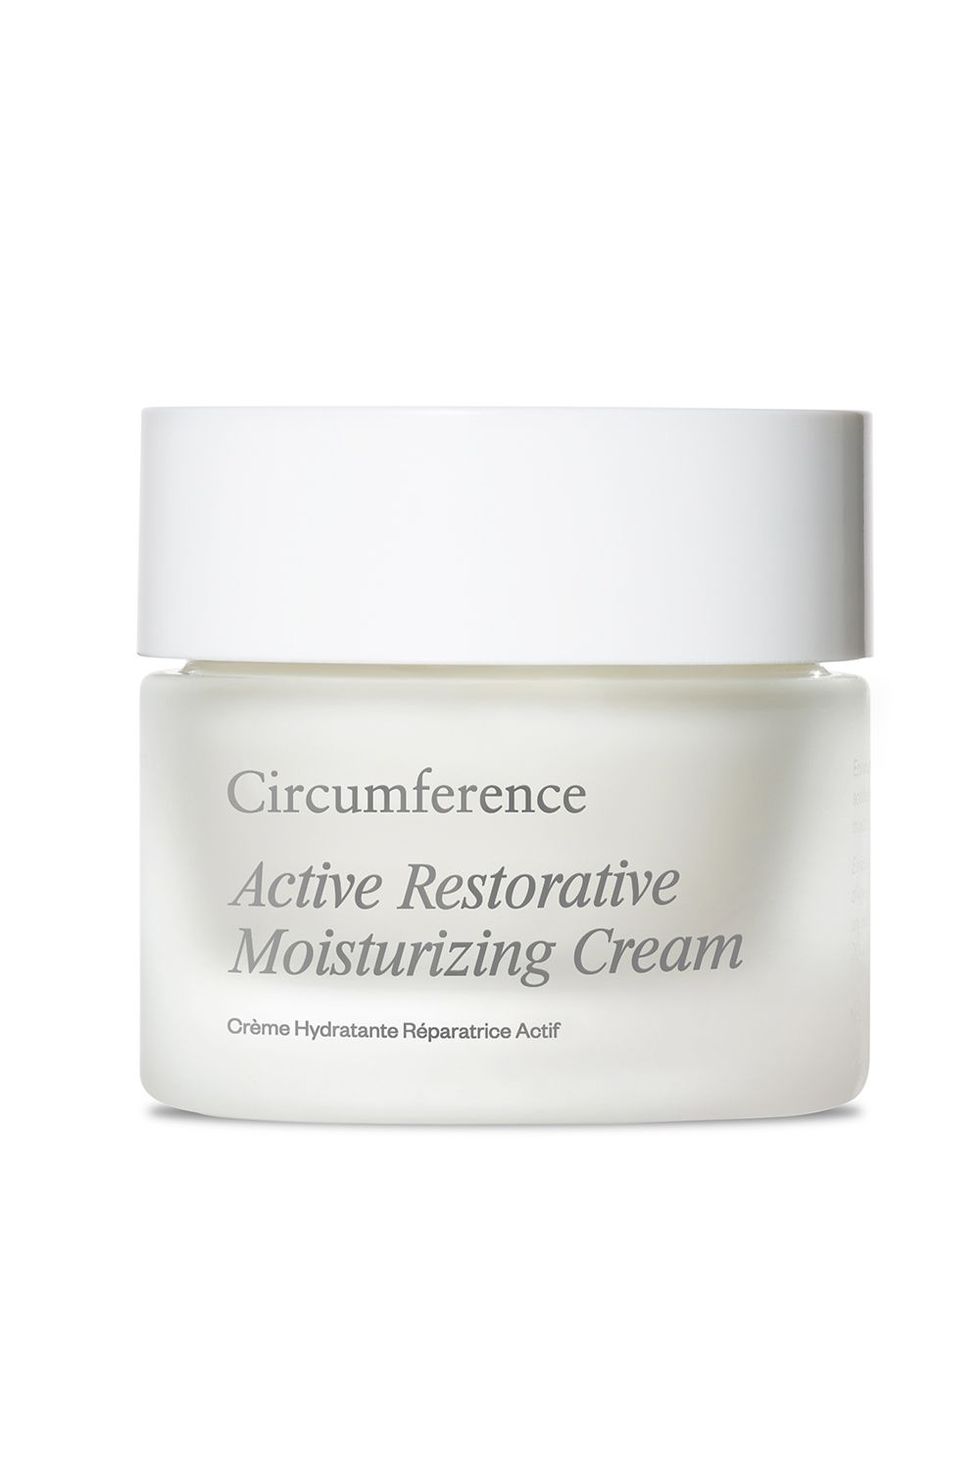 Circumference Active Restorative Moisturizing Cream